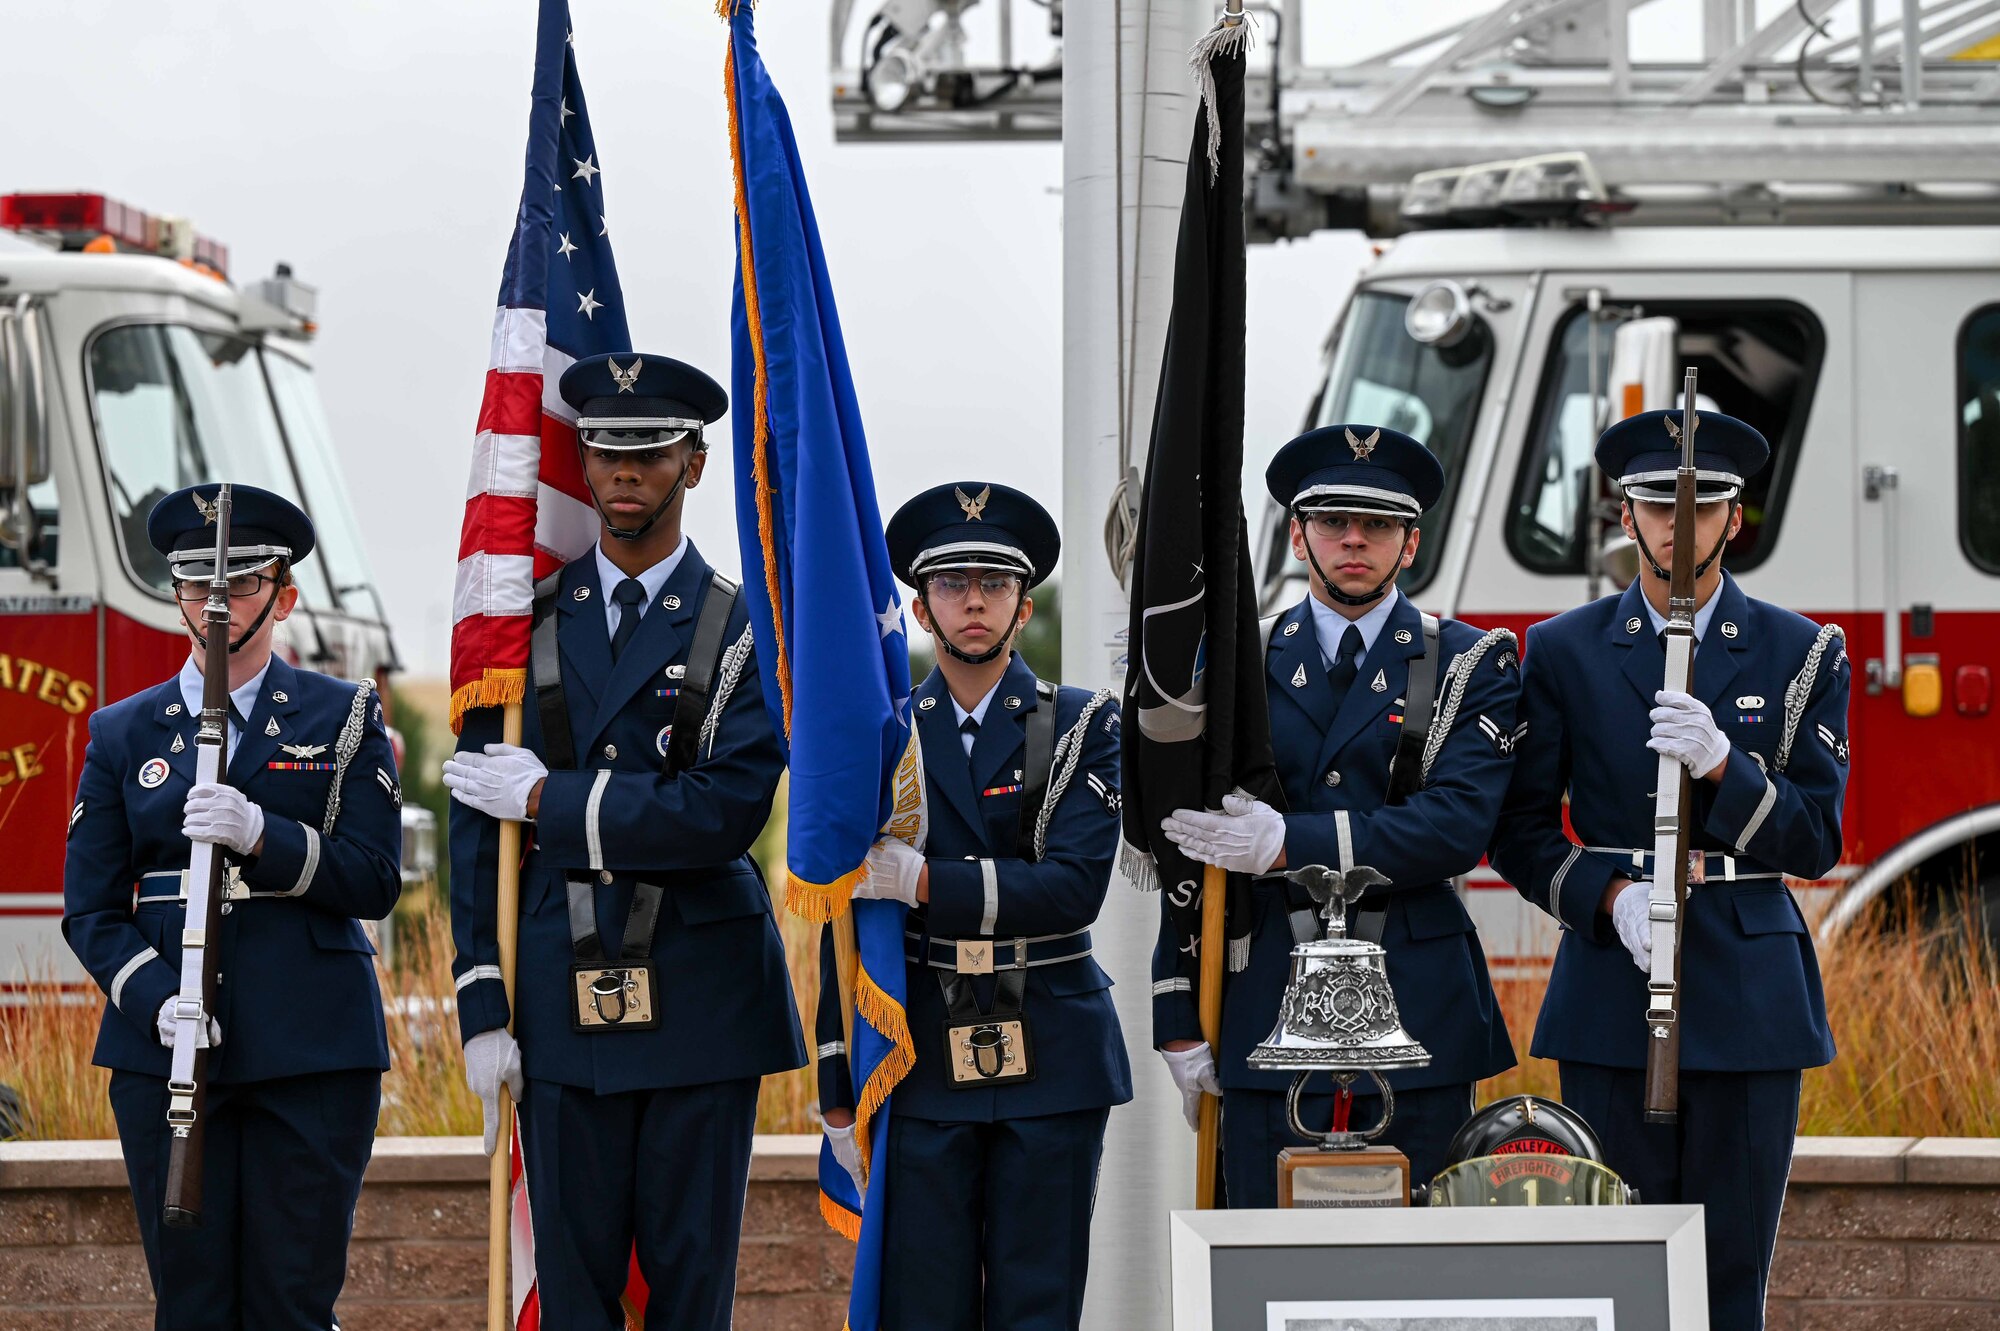 Five members of Honor Guard post the colors.